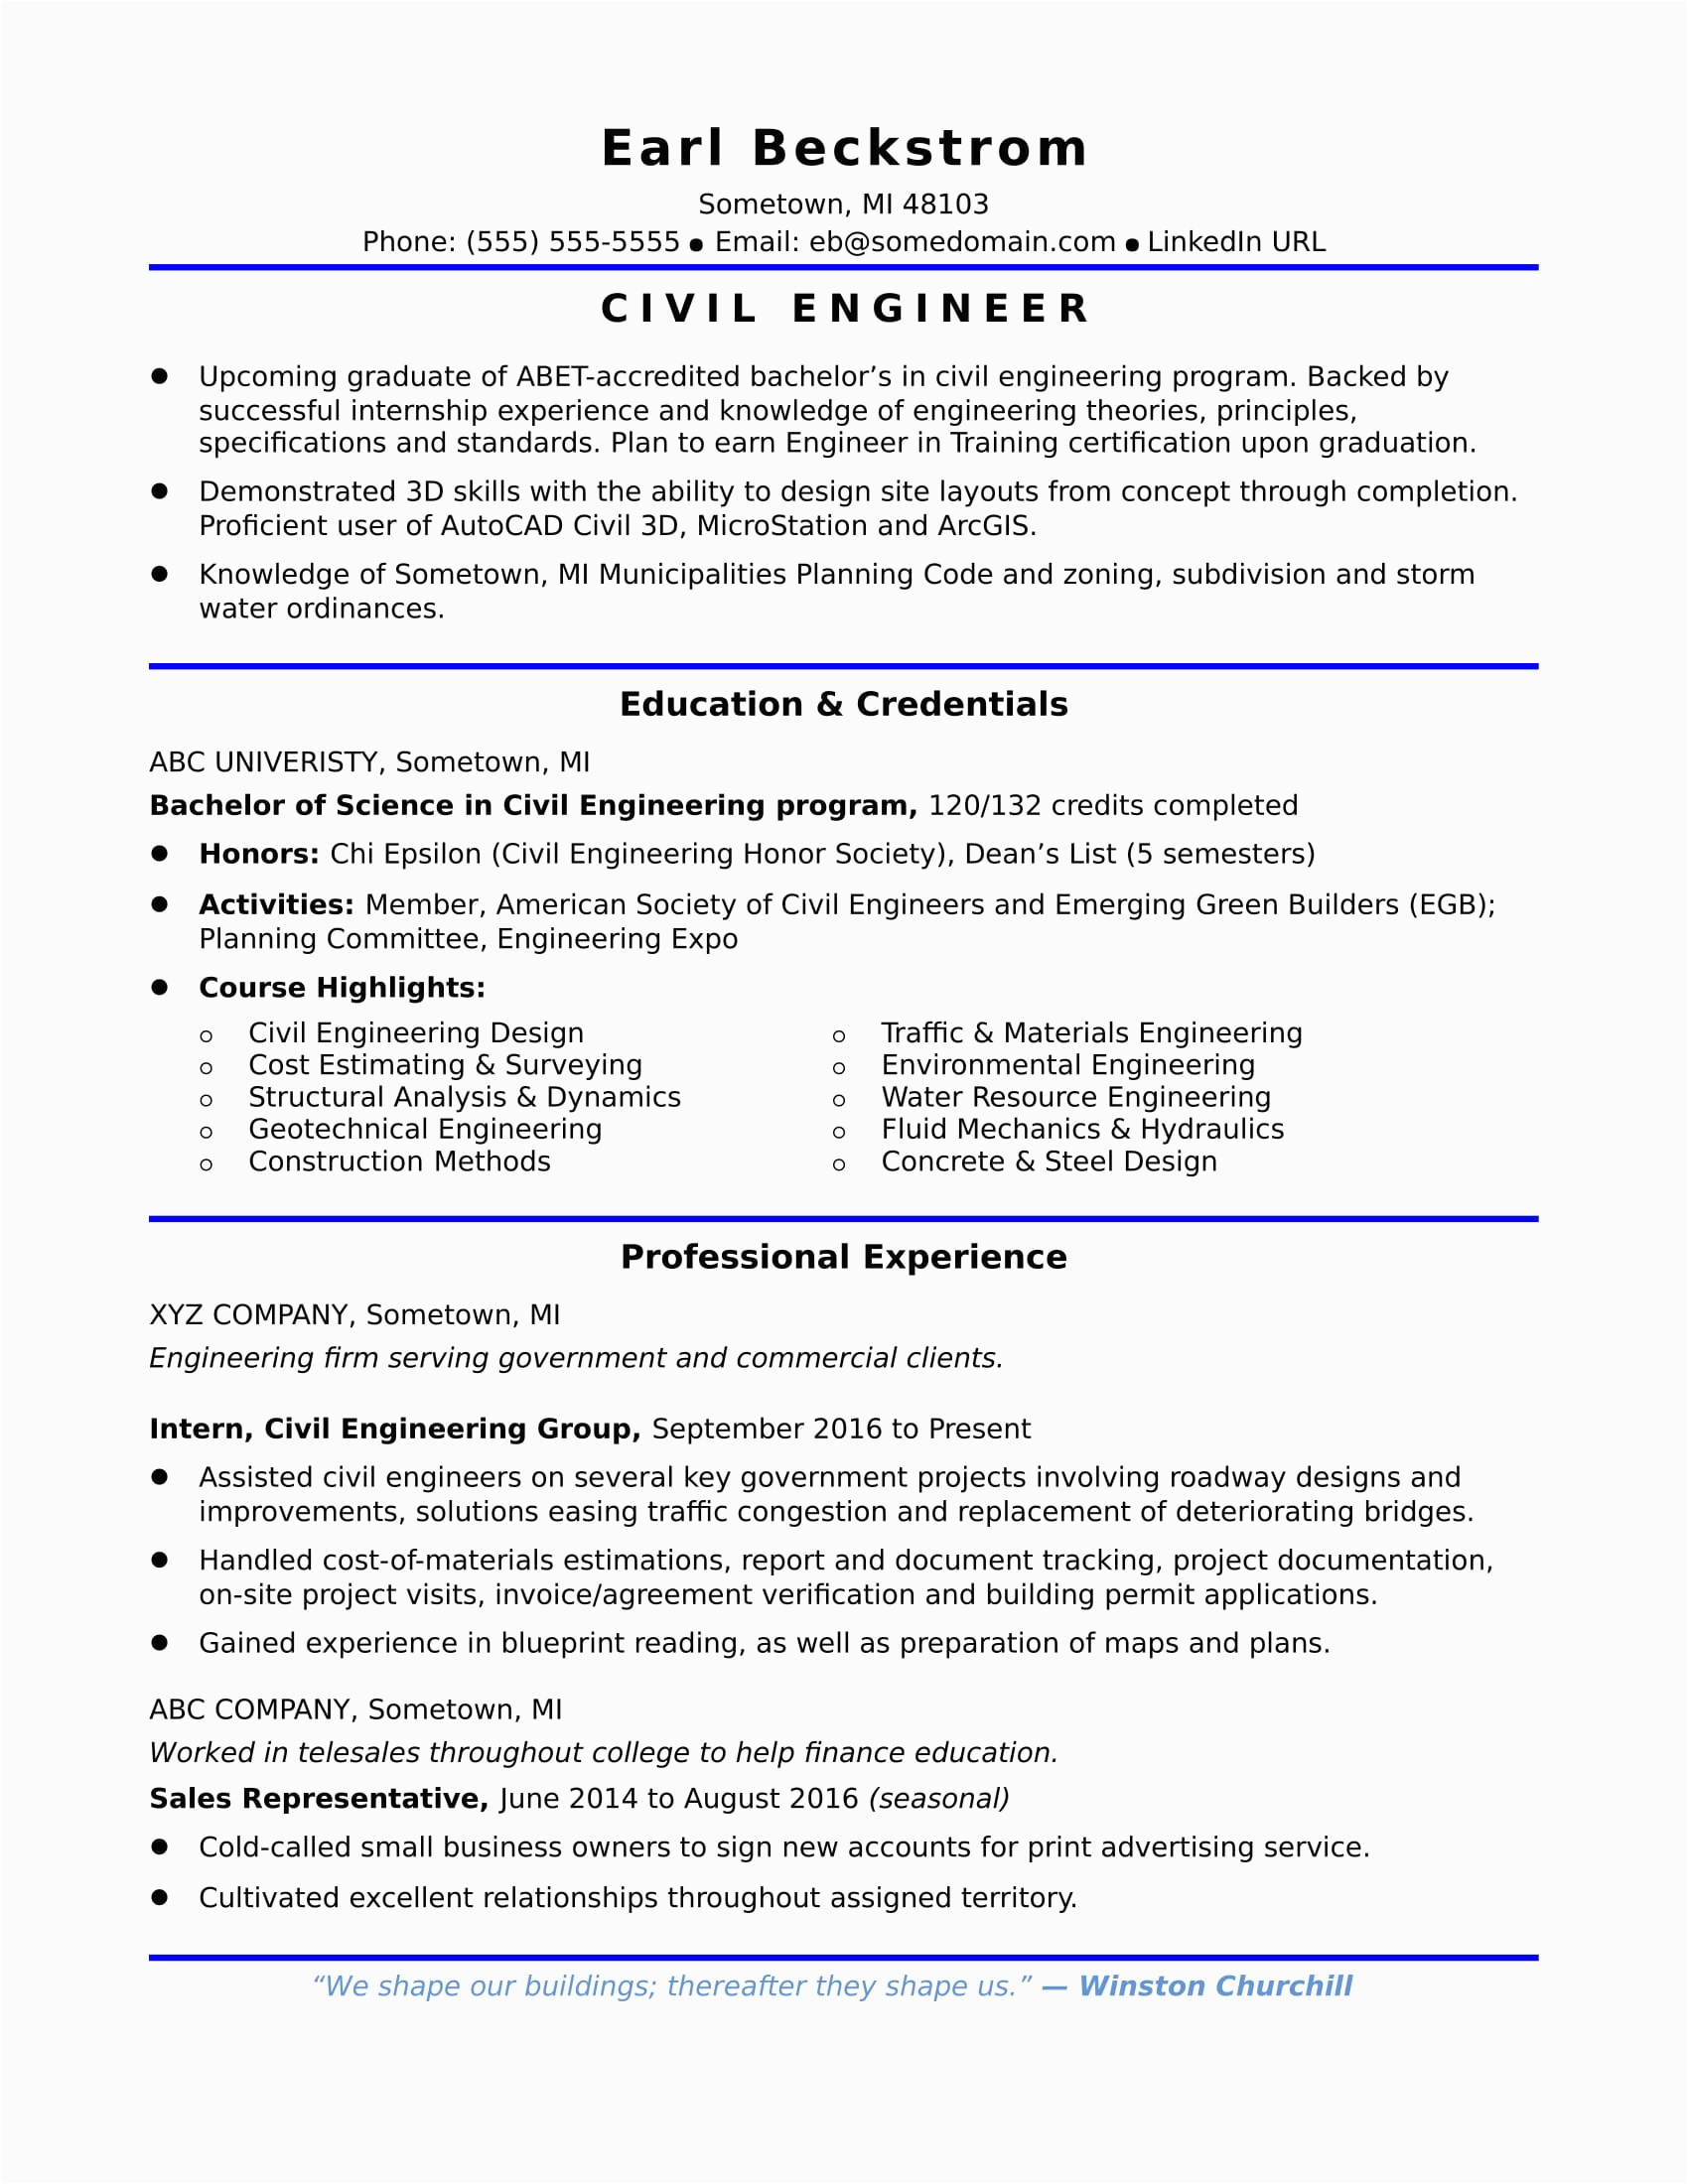 Sample Of Entry Level Engineering Resume Sample Resume for An Entry Level Civil Engineer